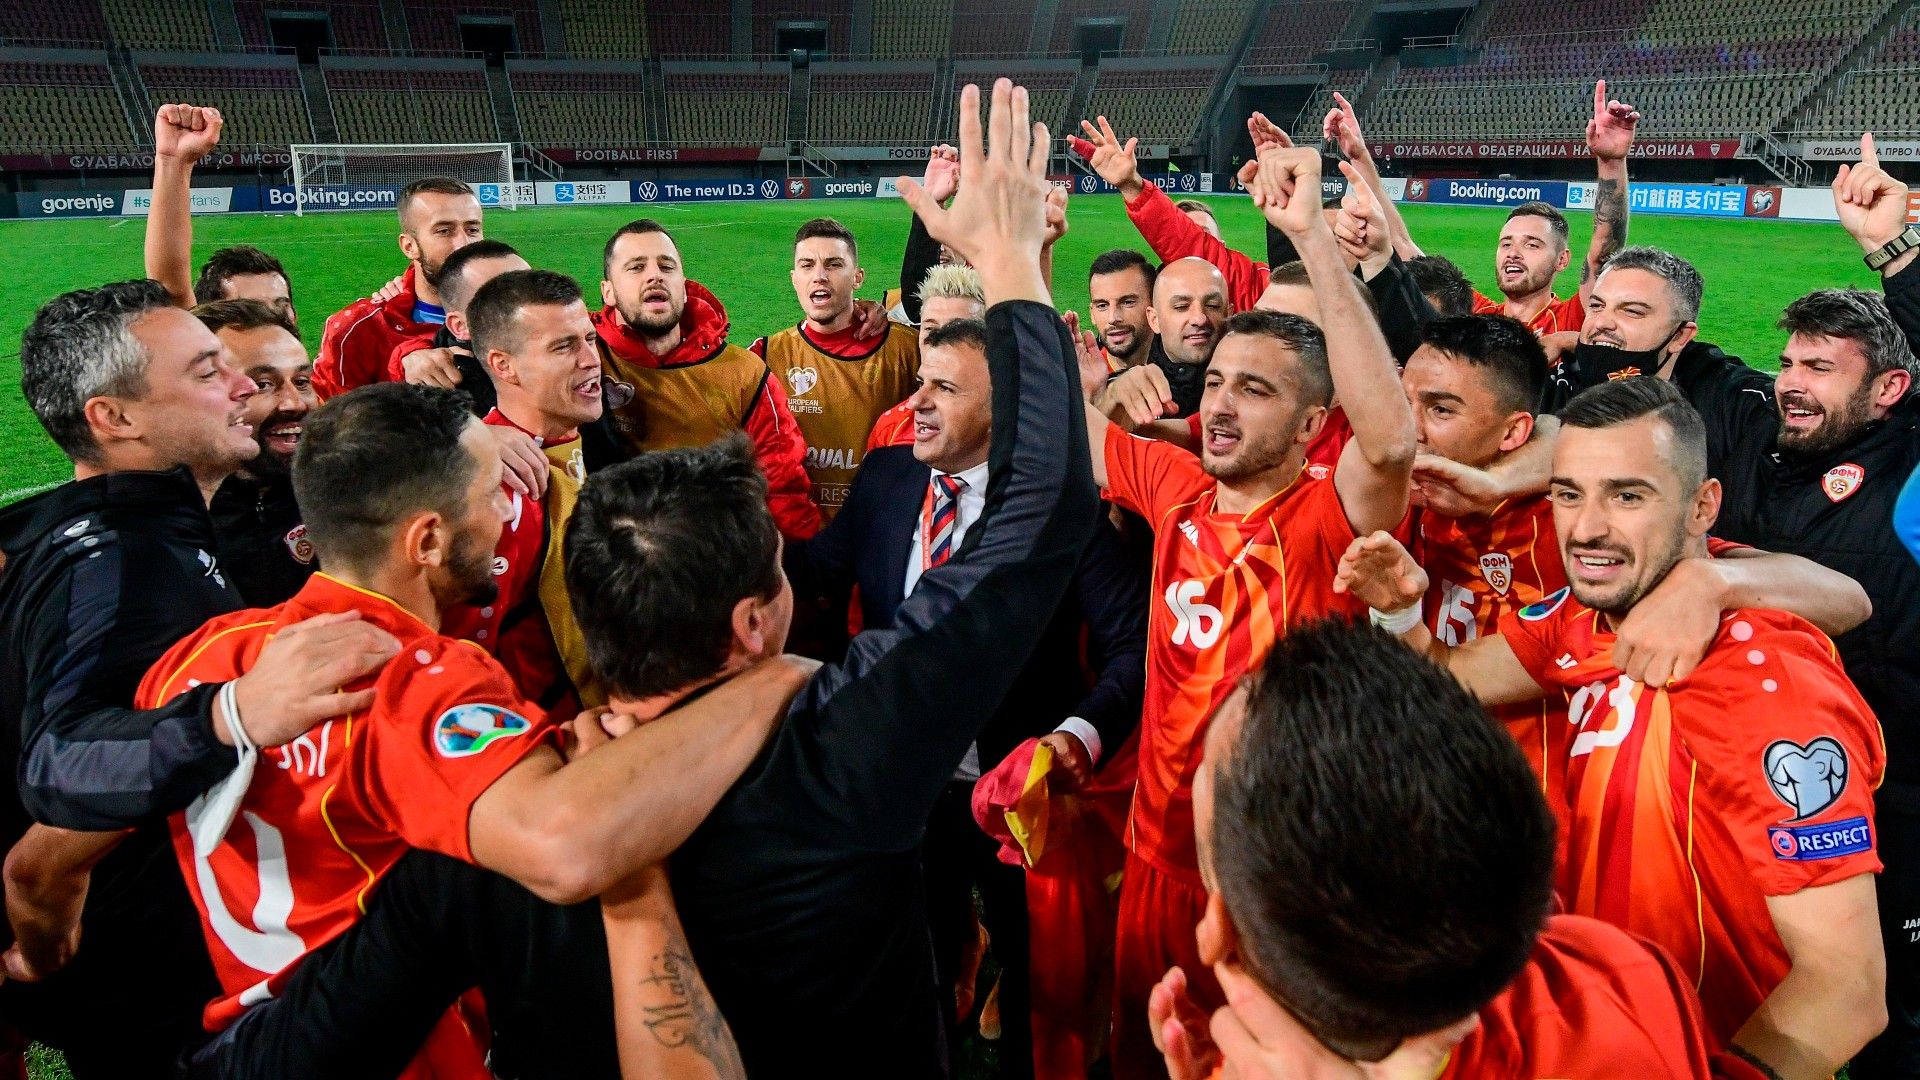 A dream has become reality' Mourinho favourite Pandev fired North Macedonia to Euro 2020